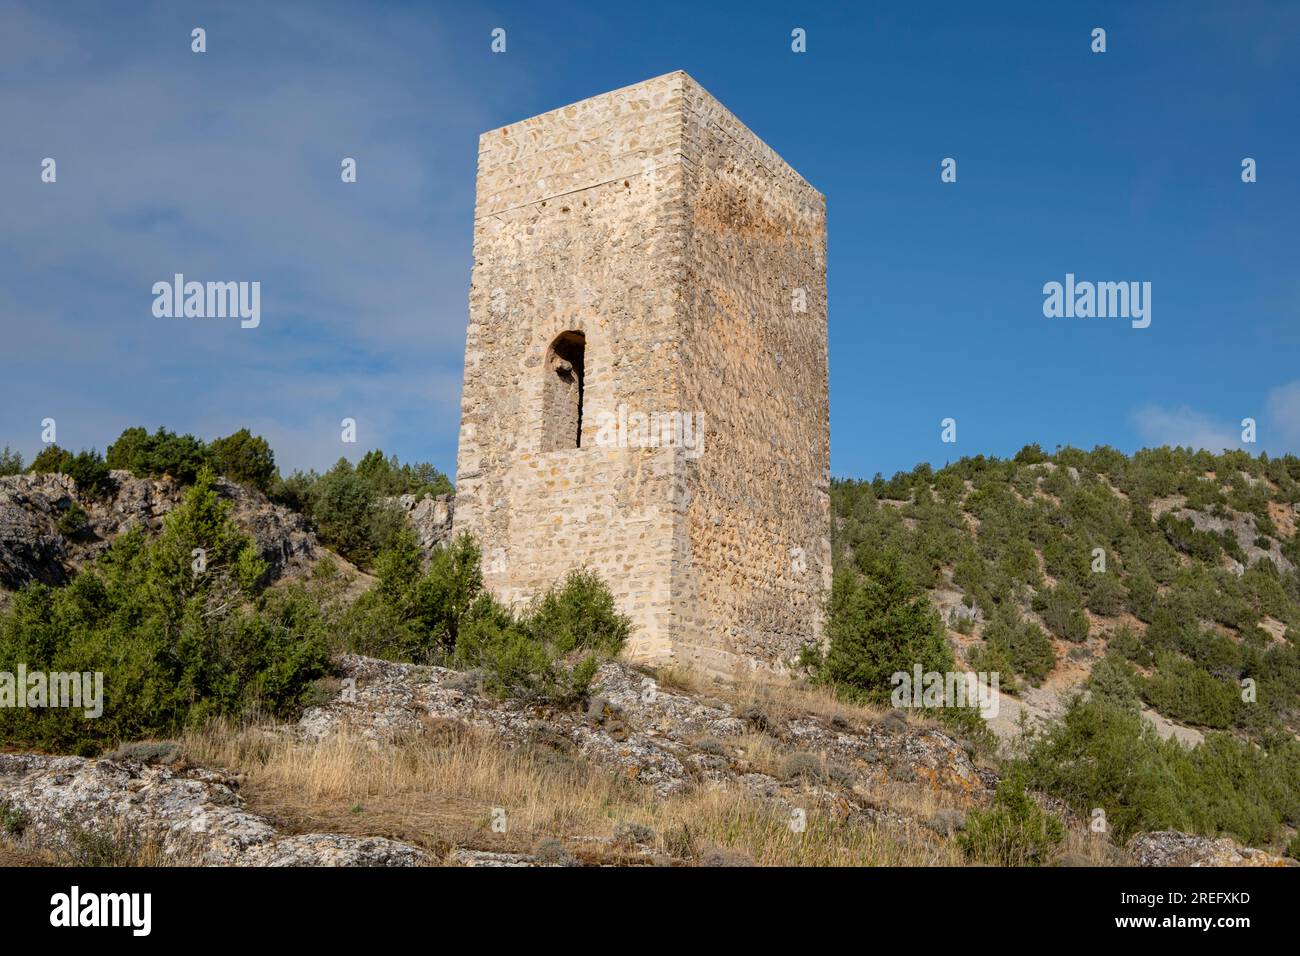 Tower of Islamic origin, Chaorna, Soria, autonomous community of Castilla y León, Spain, Europe Stock Photo